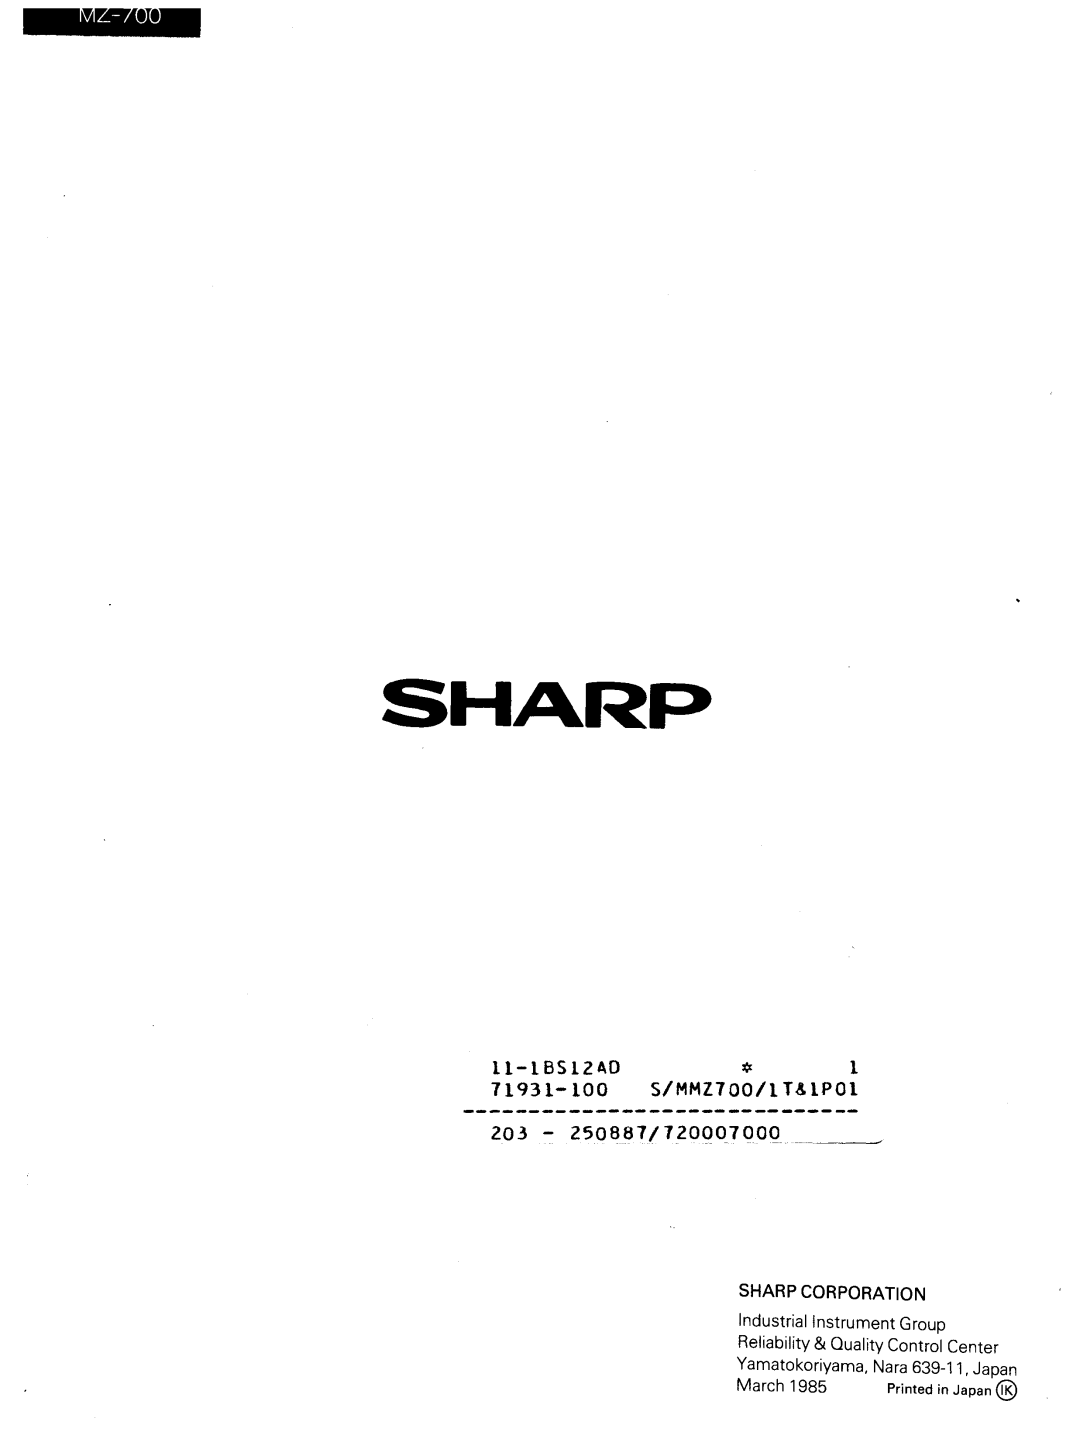 Sharp MZ-700 manual 11-185121\0 71931-100 S!MMZ700!lT&1POl 203 - 250887!720g0700Q, Sharp Corporation, March 